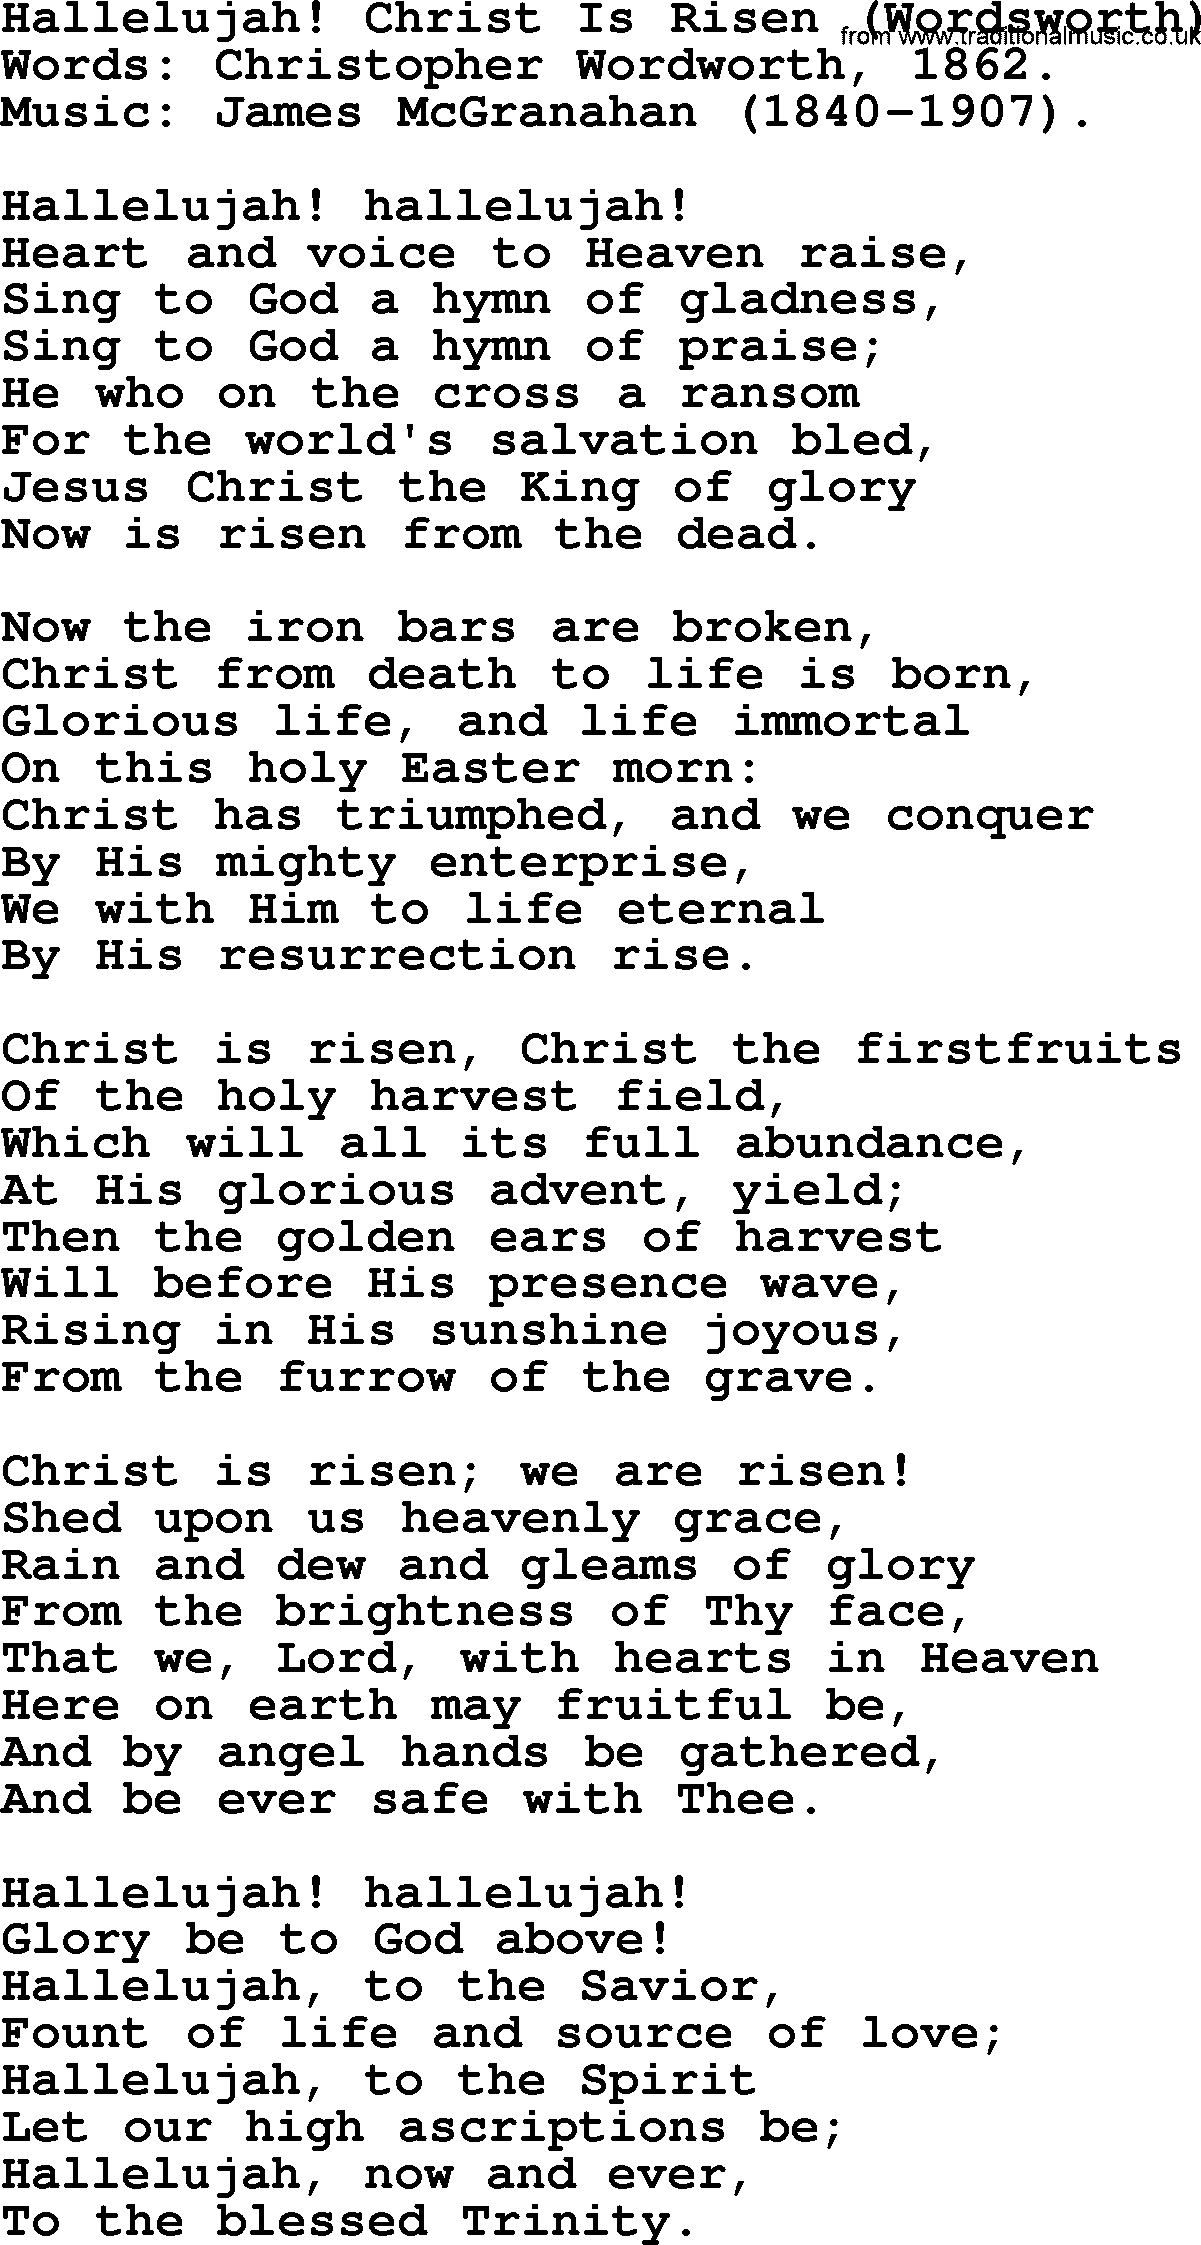 Easter Hymns, Hymn: Hallelujah! Christ Is Risen (wordsworth), lyrics with PDF